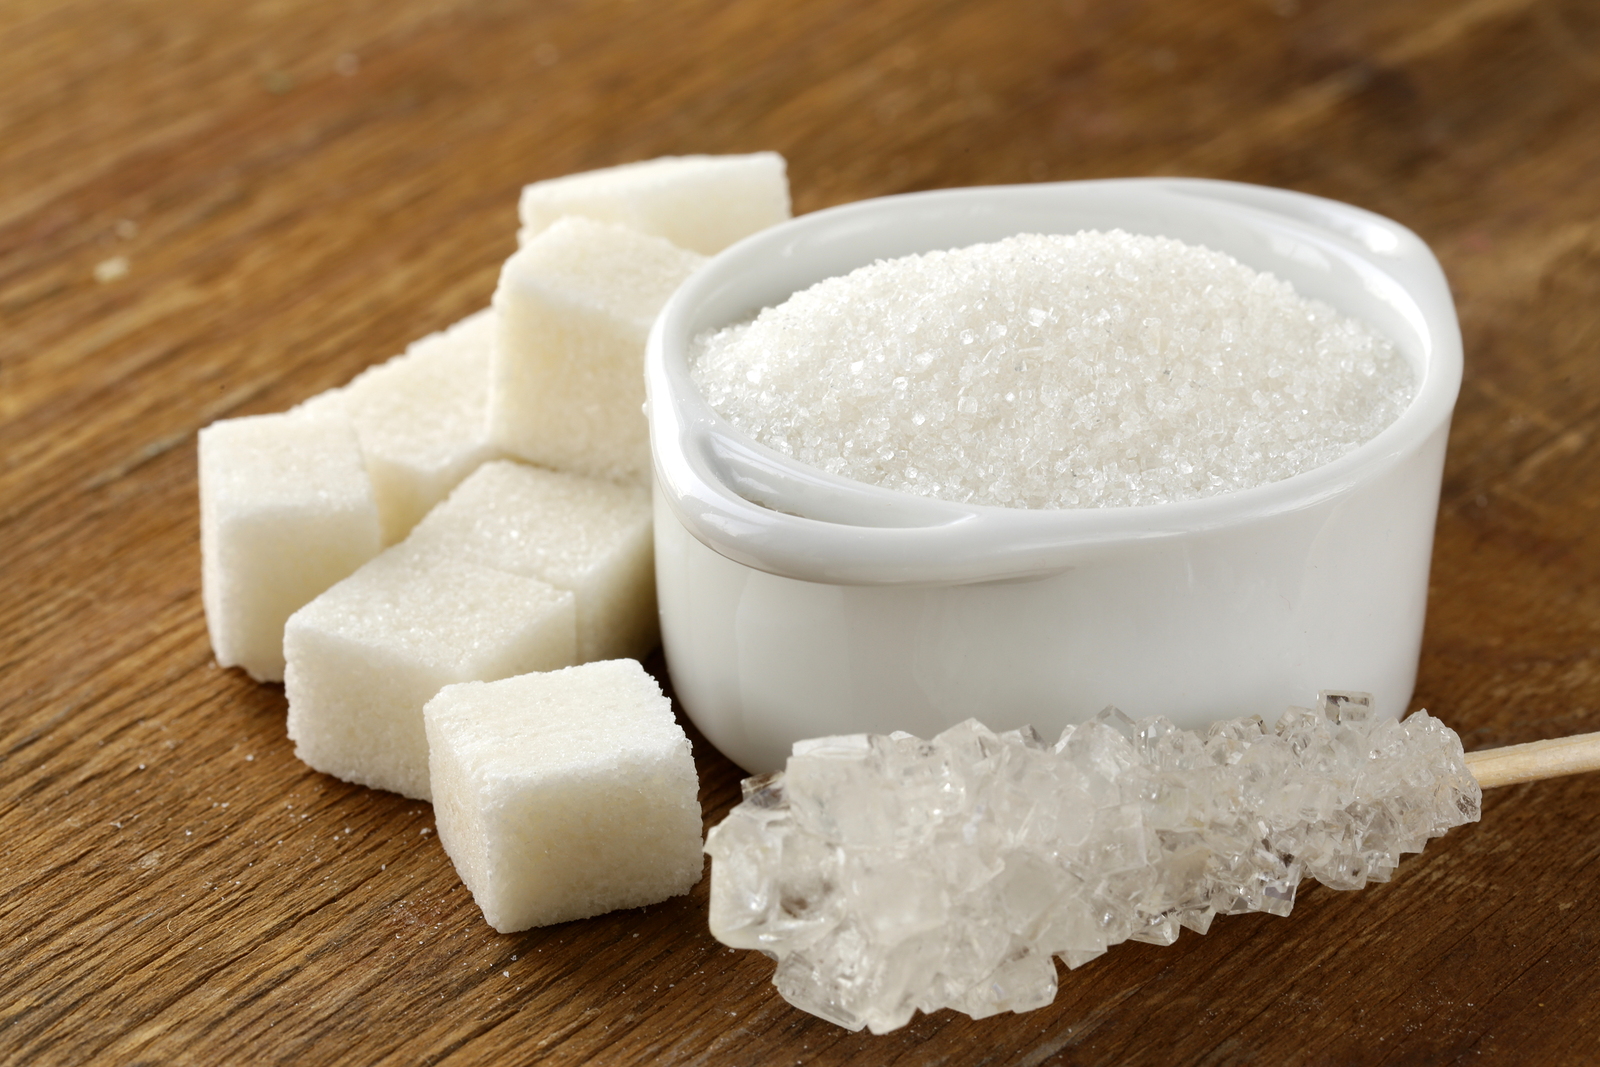 Several types of white sugar - refined sugar and granulated suga